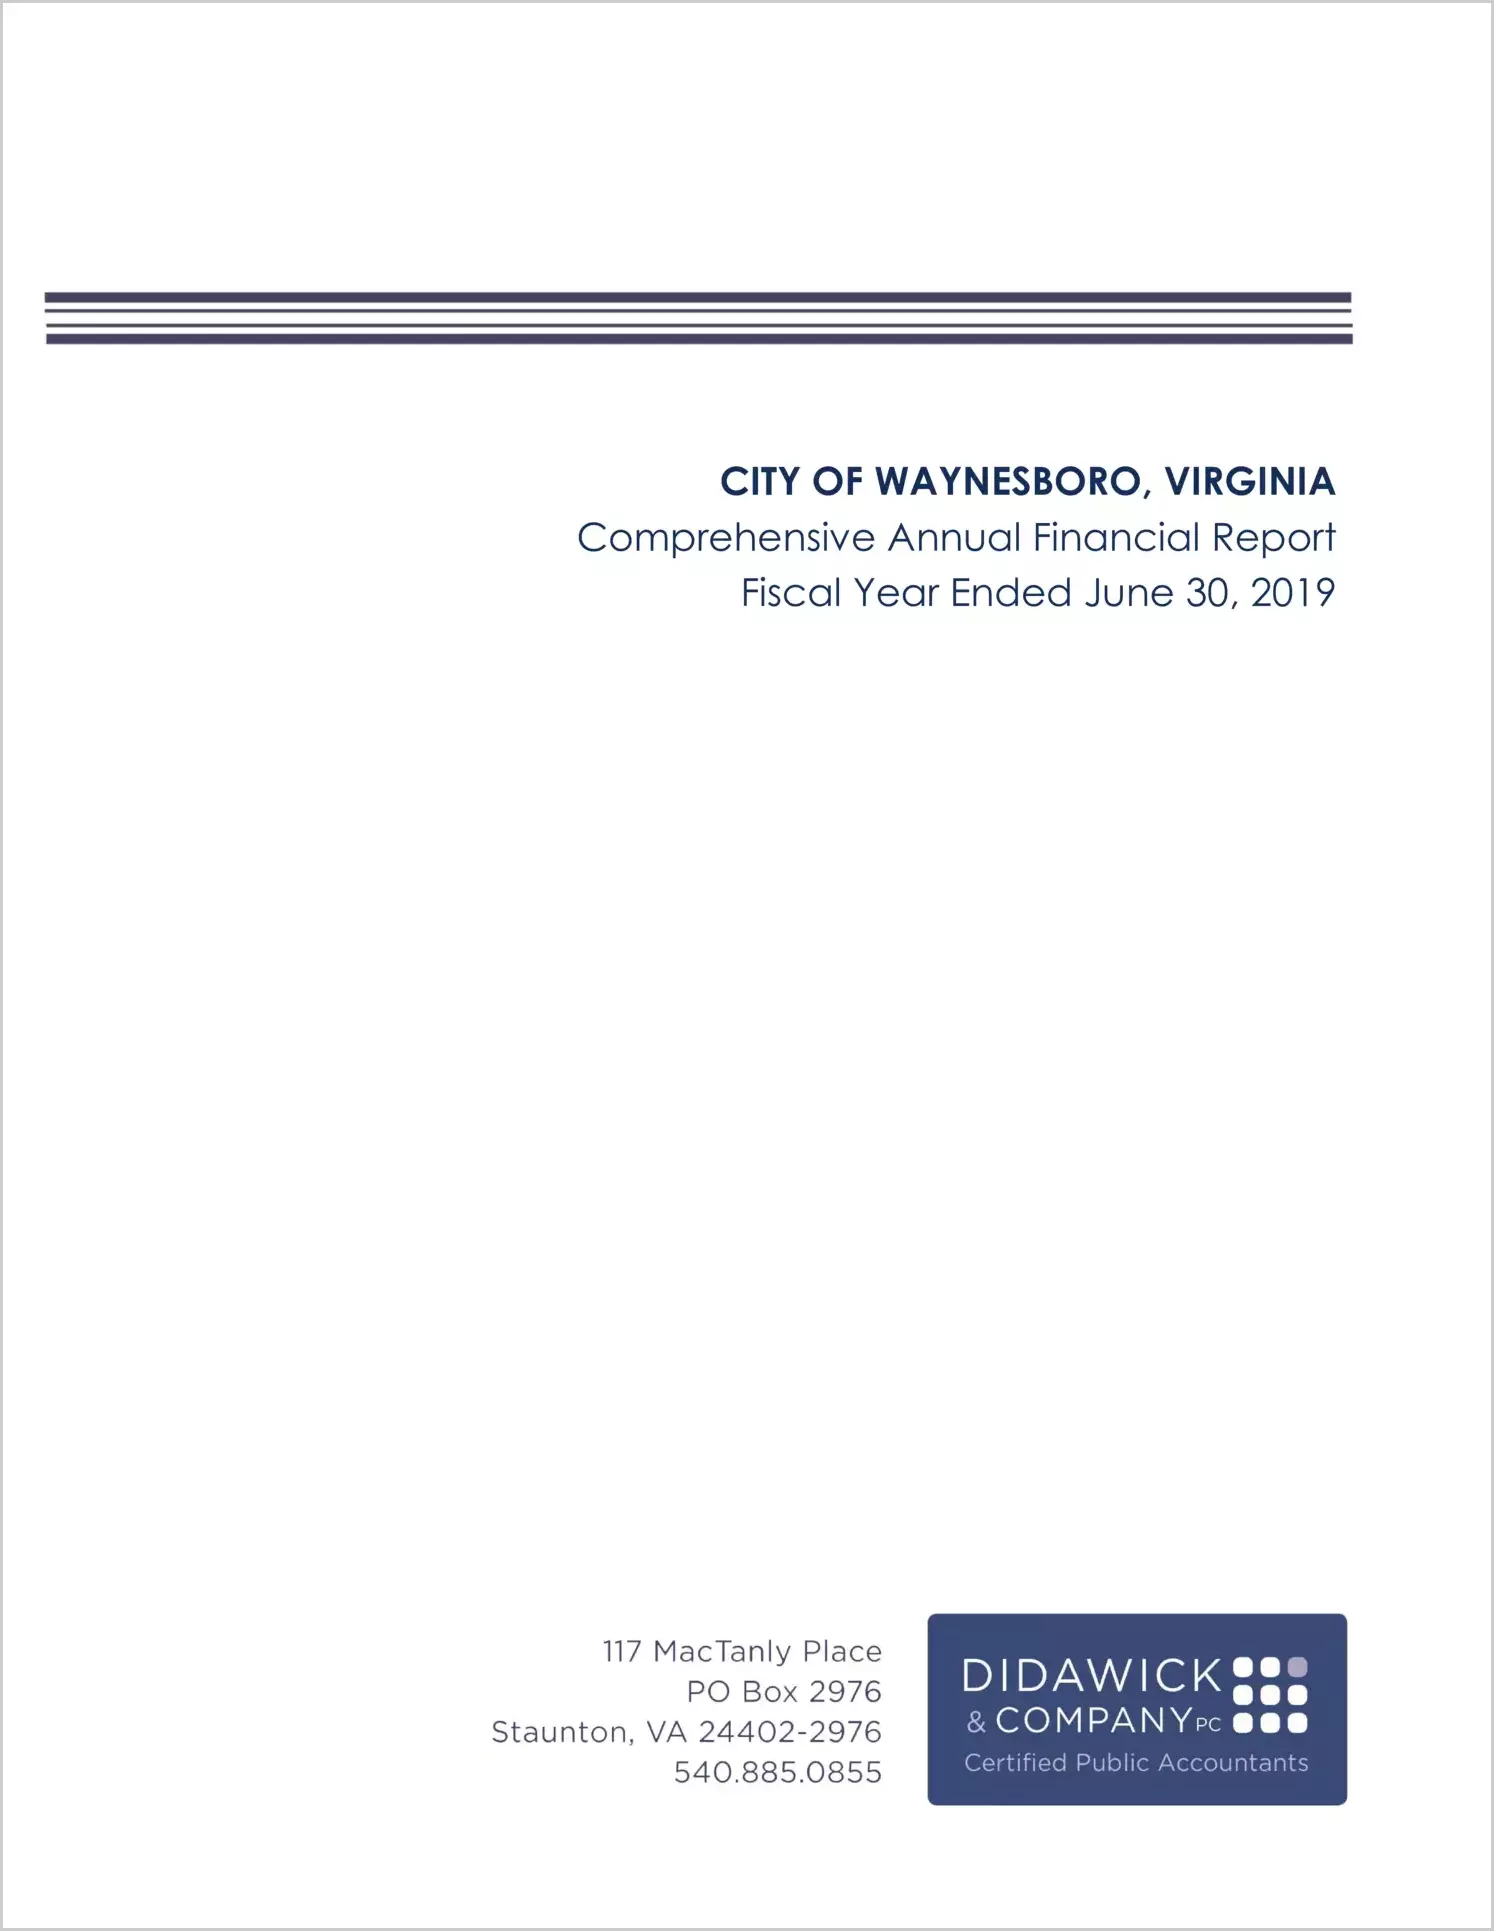 2019 Annual Financial Report for City of Waynesboro